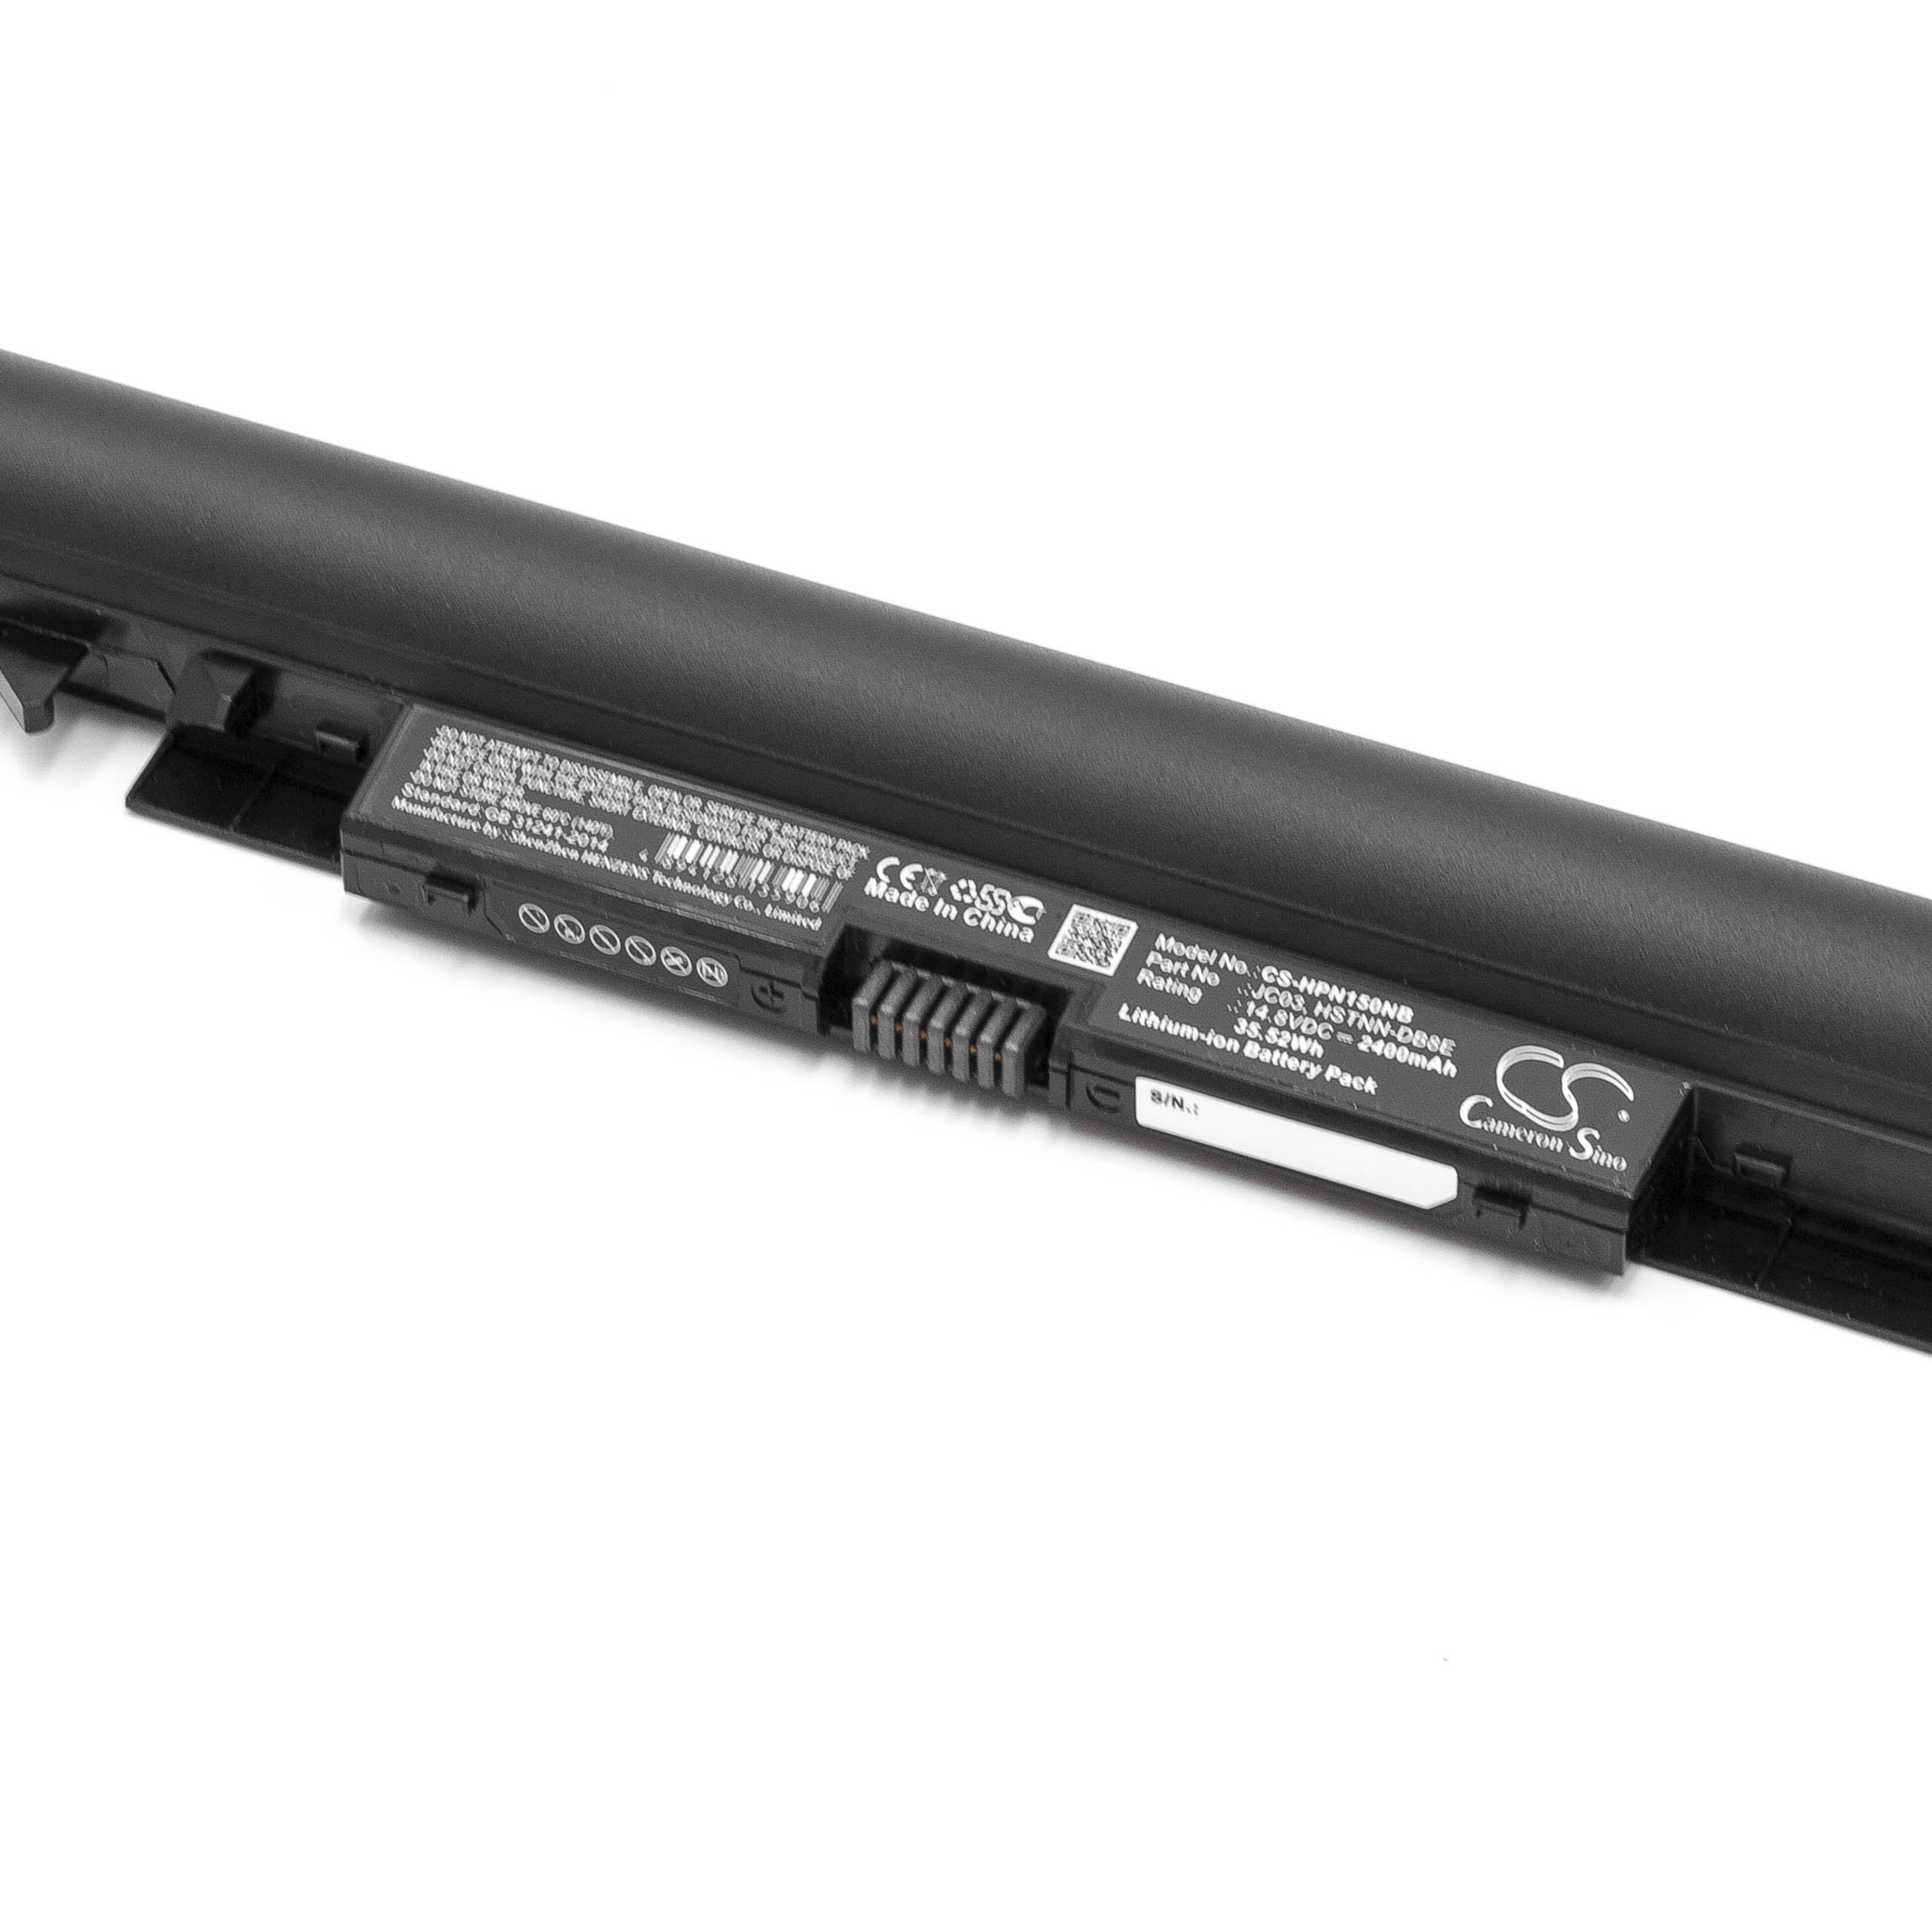 Akumulator do laptopa zamiennik HP HSTNN-DB8E, 919701-850, 919700-850 - 2400 mAh 14,8 V Li-Ion, czarny